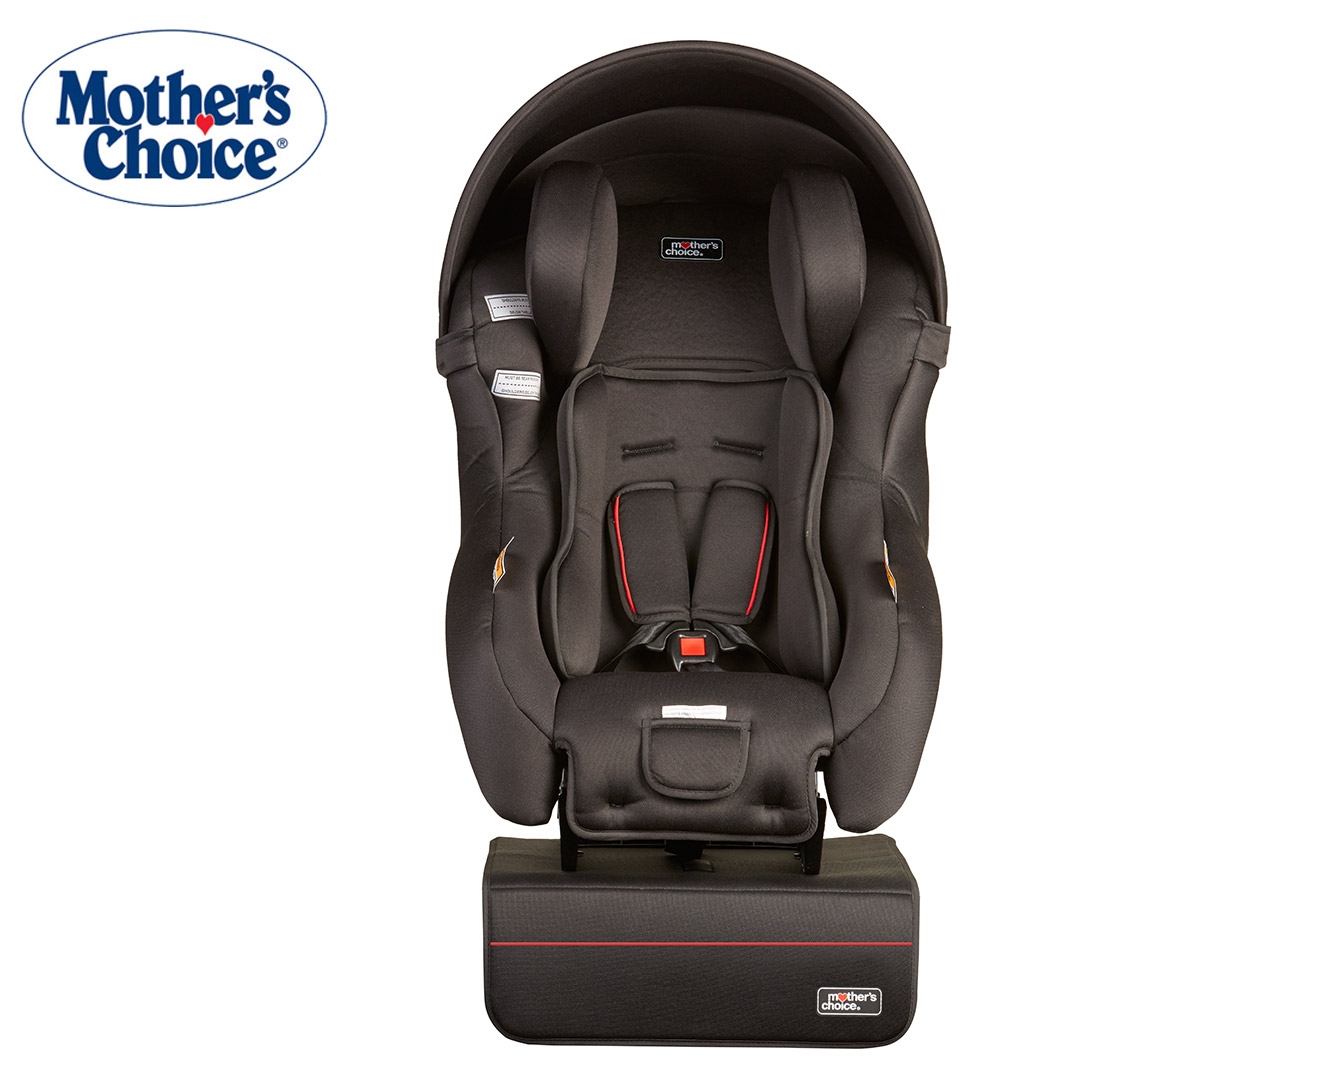 Mother's Choice Wonder Convertible Car Seat - Black